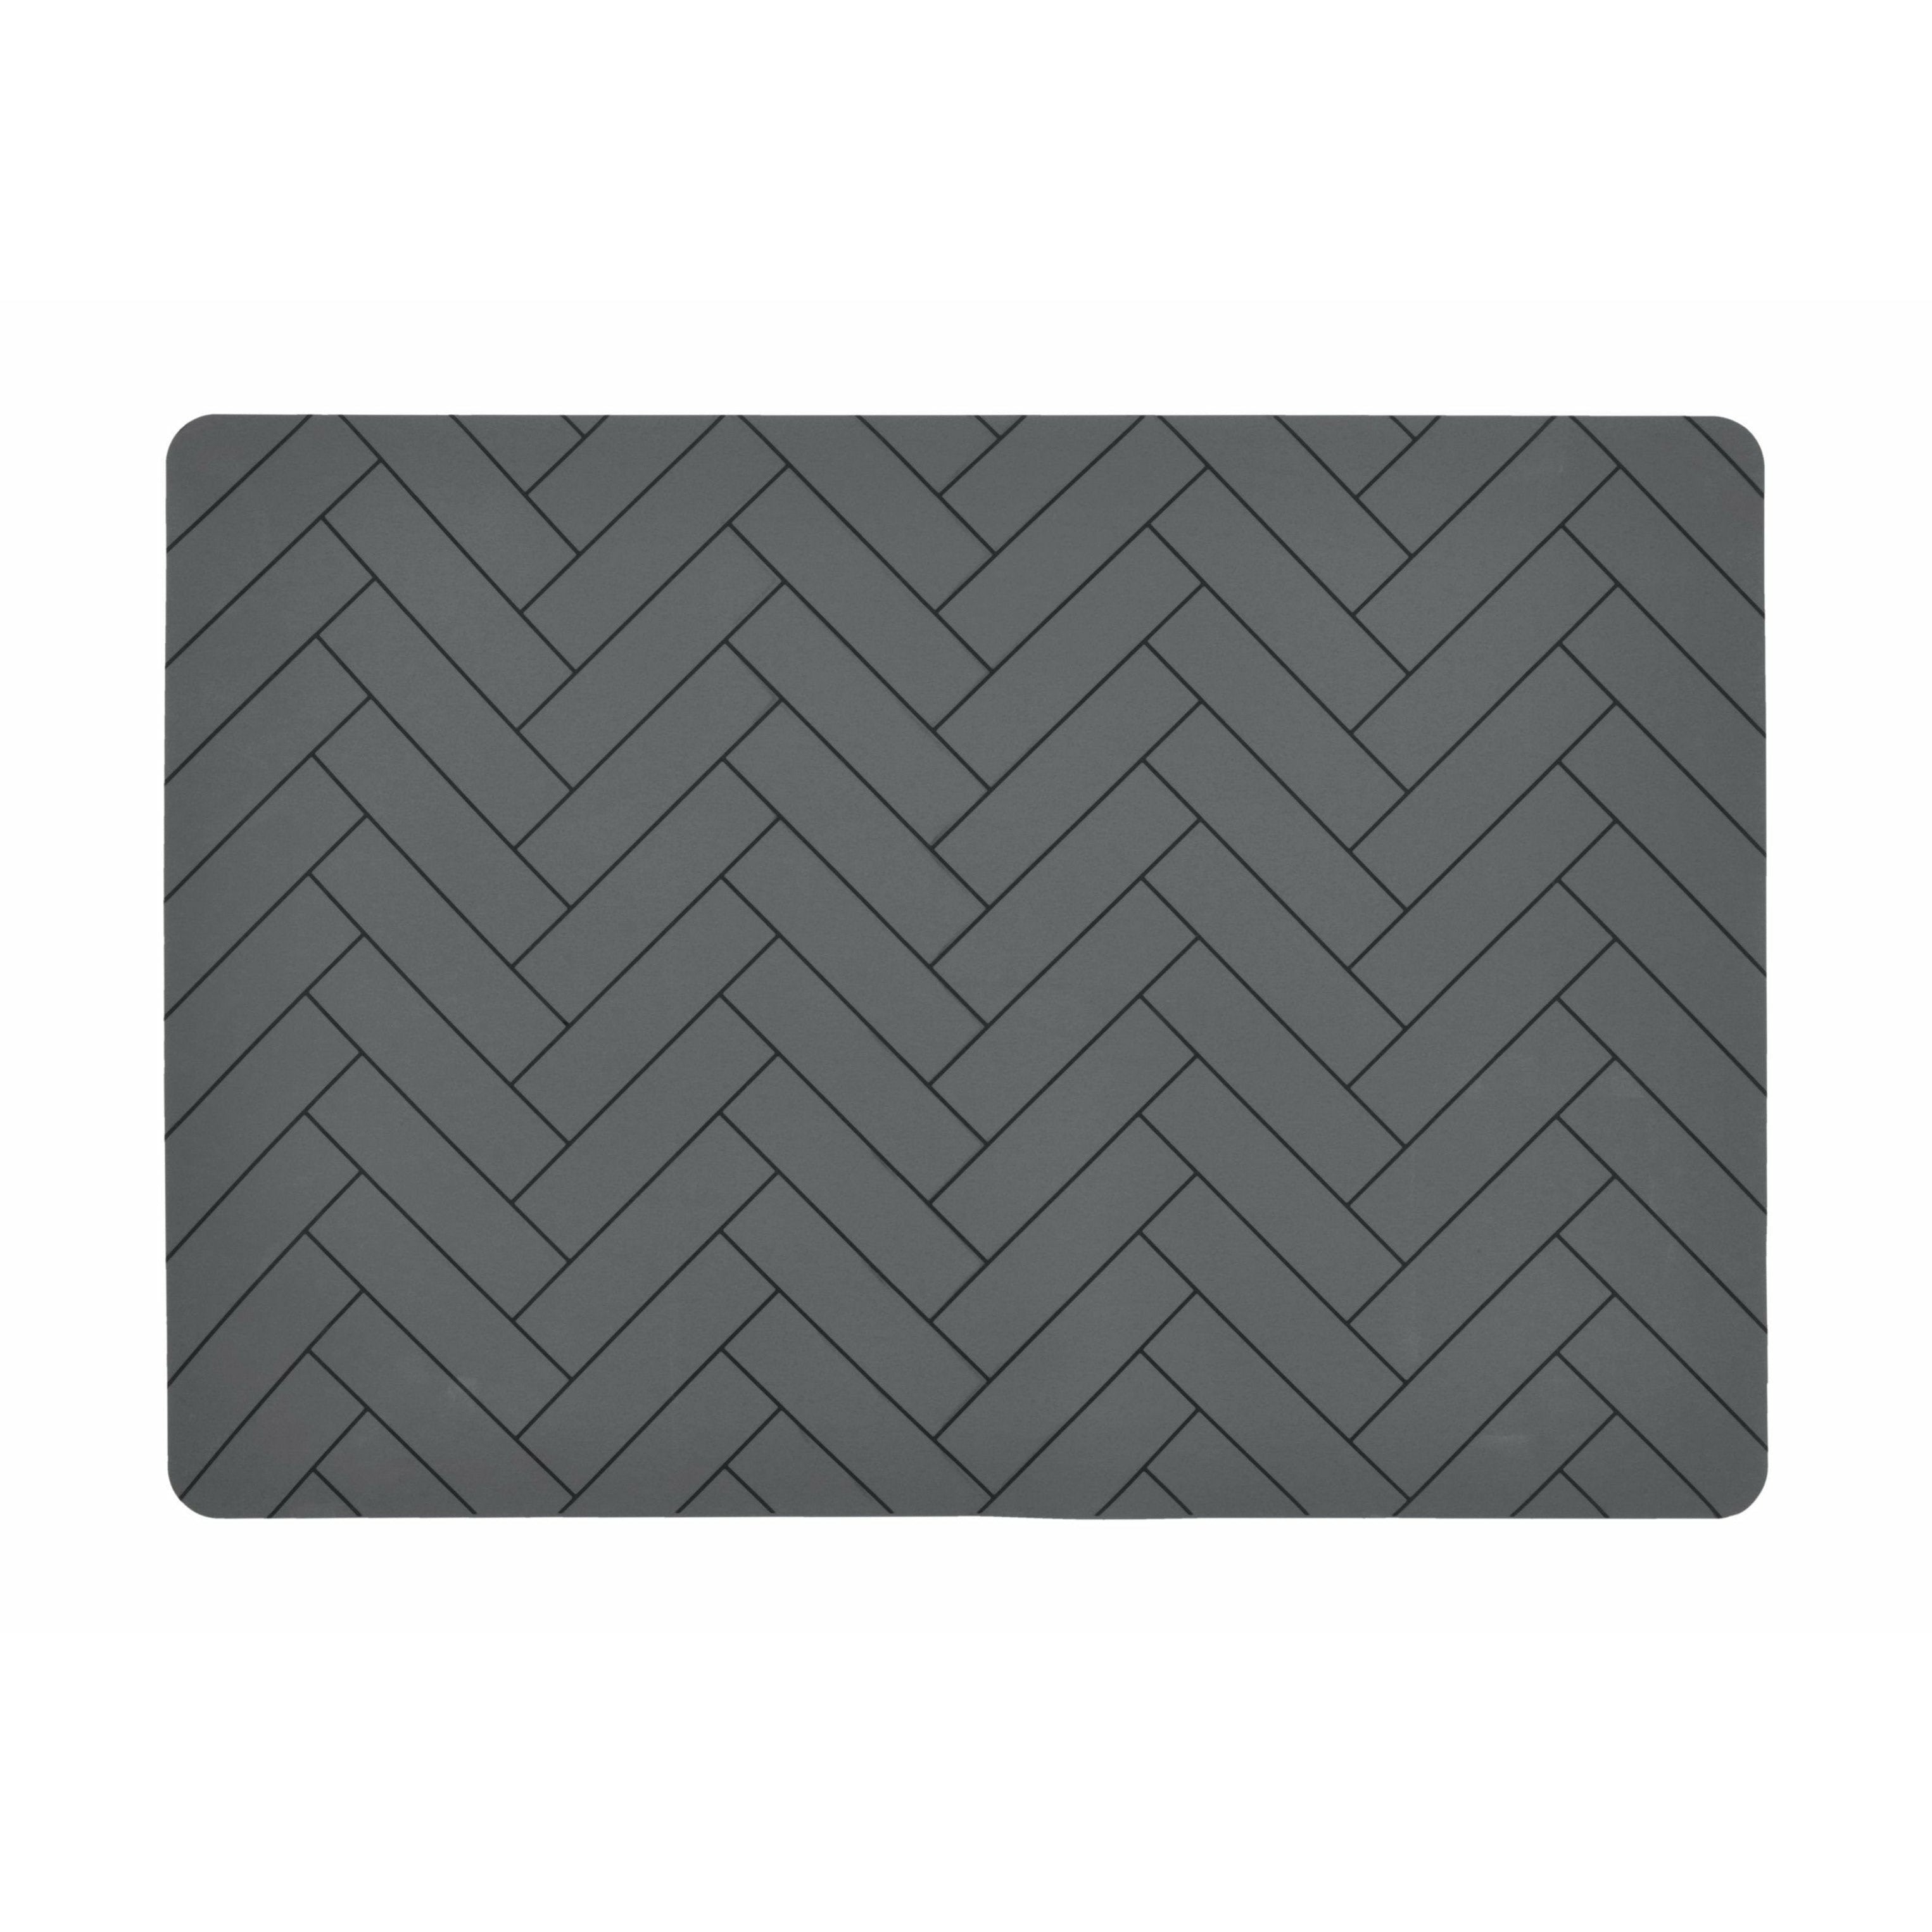 Södahl Fliser placemat 33x48, grå